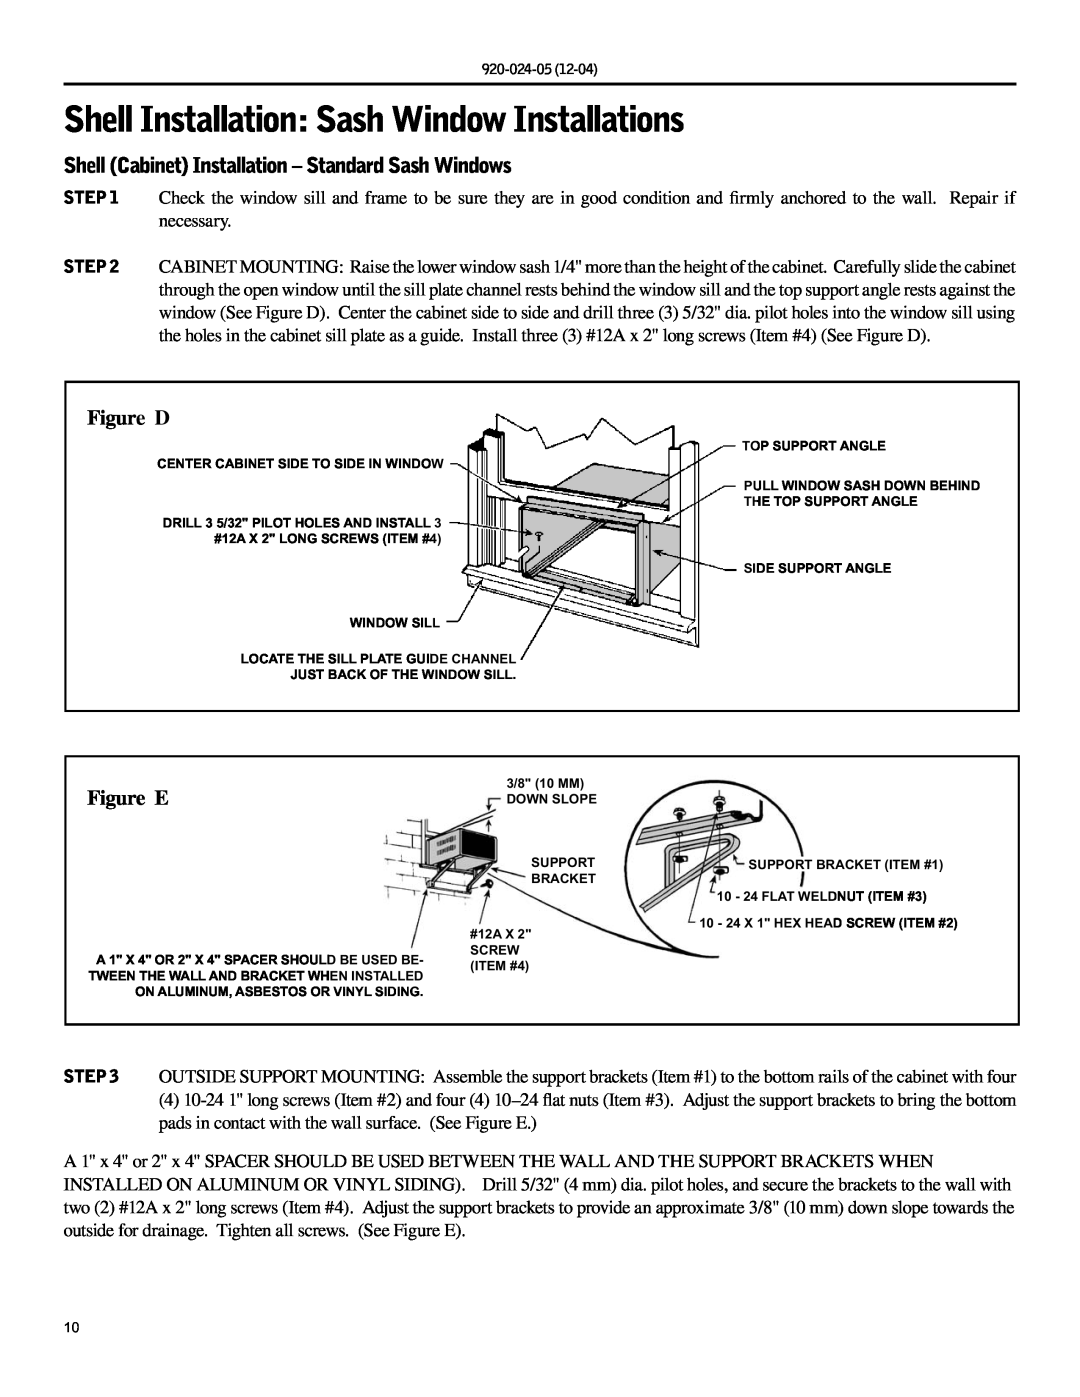 Friedrich SH15, SH20 operation manual Shell Installation: Sash Window Installations, Figure D, Figure E 